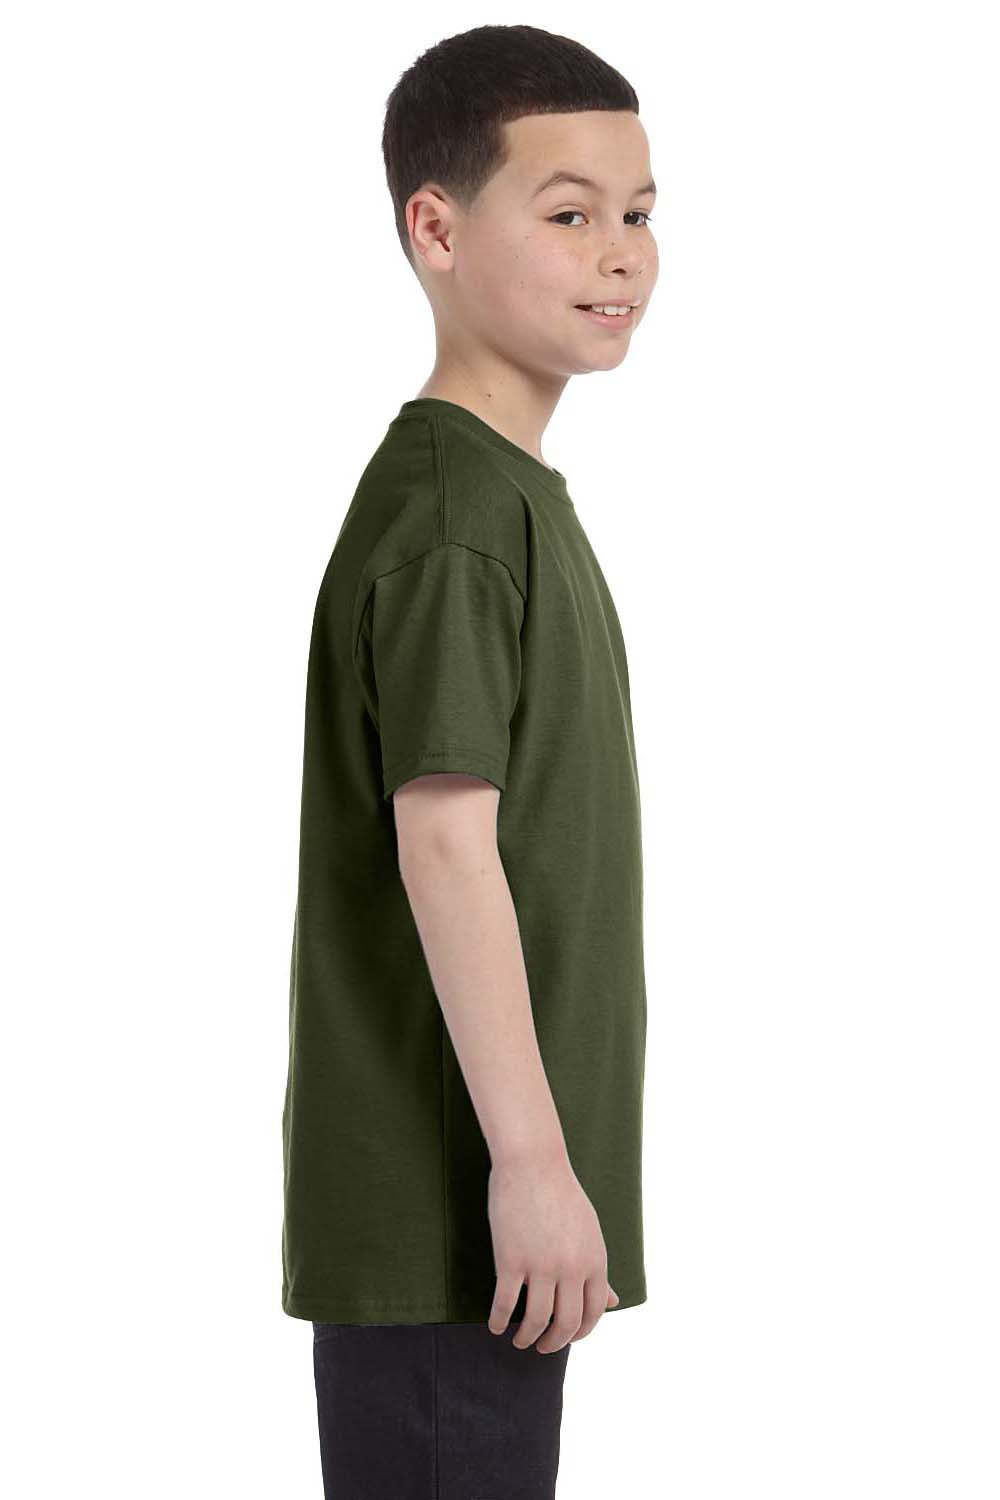 Jerzees 29B Youth Dri-Power Moisture Wicking Short Sleeve Crewneck T-Shirt Military Green Side